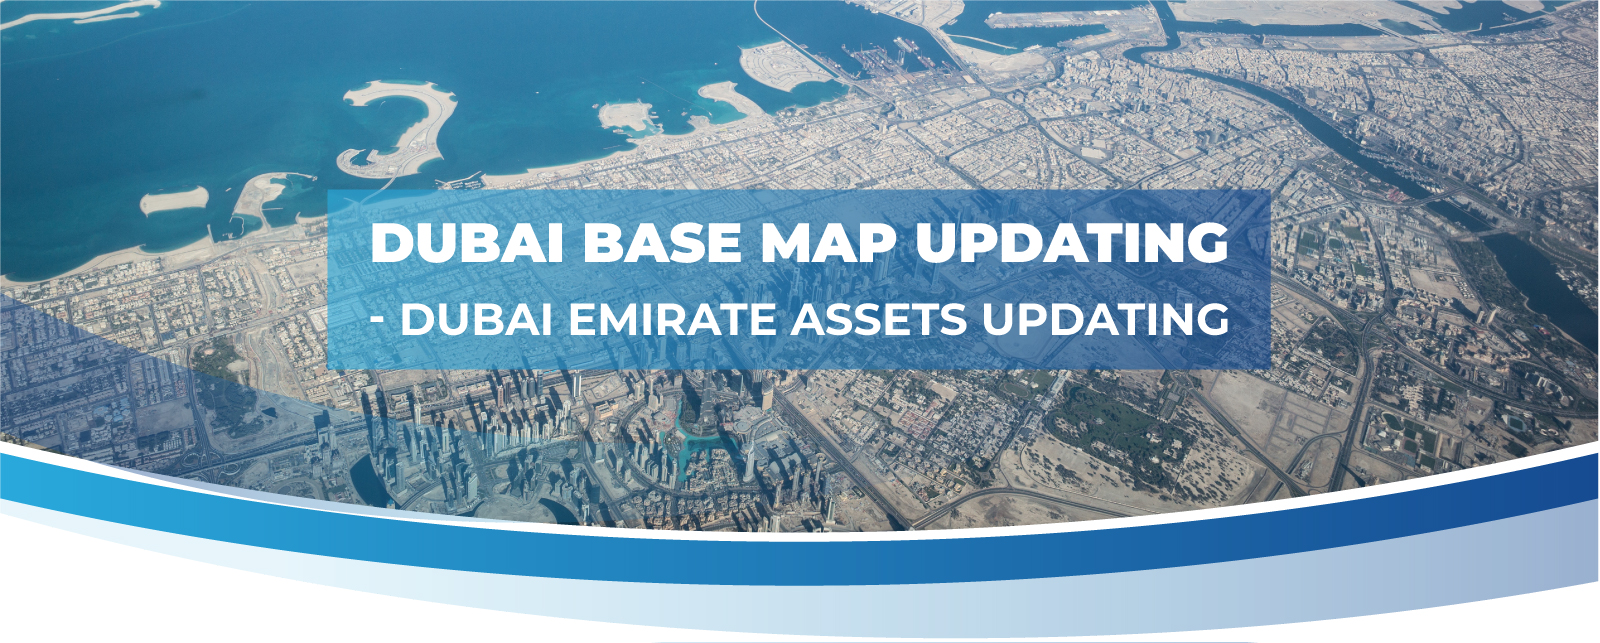 Dubai Base Map Updating - Dubai Emirate assets updating